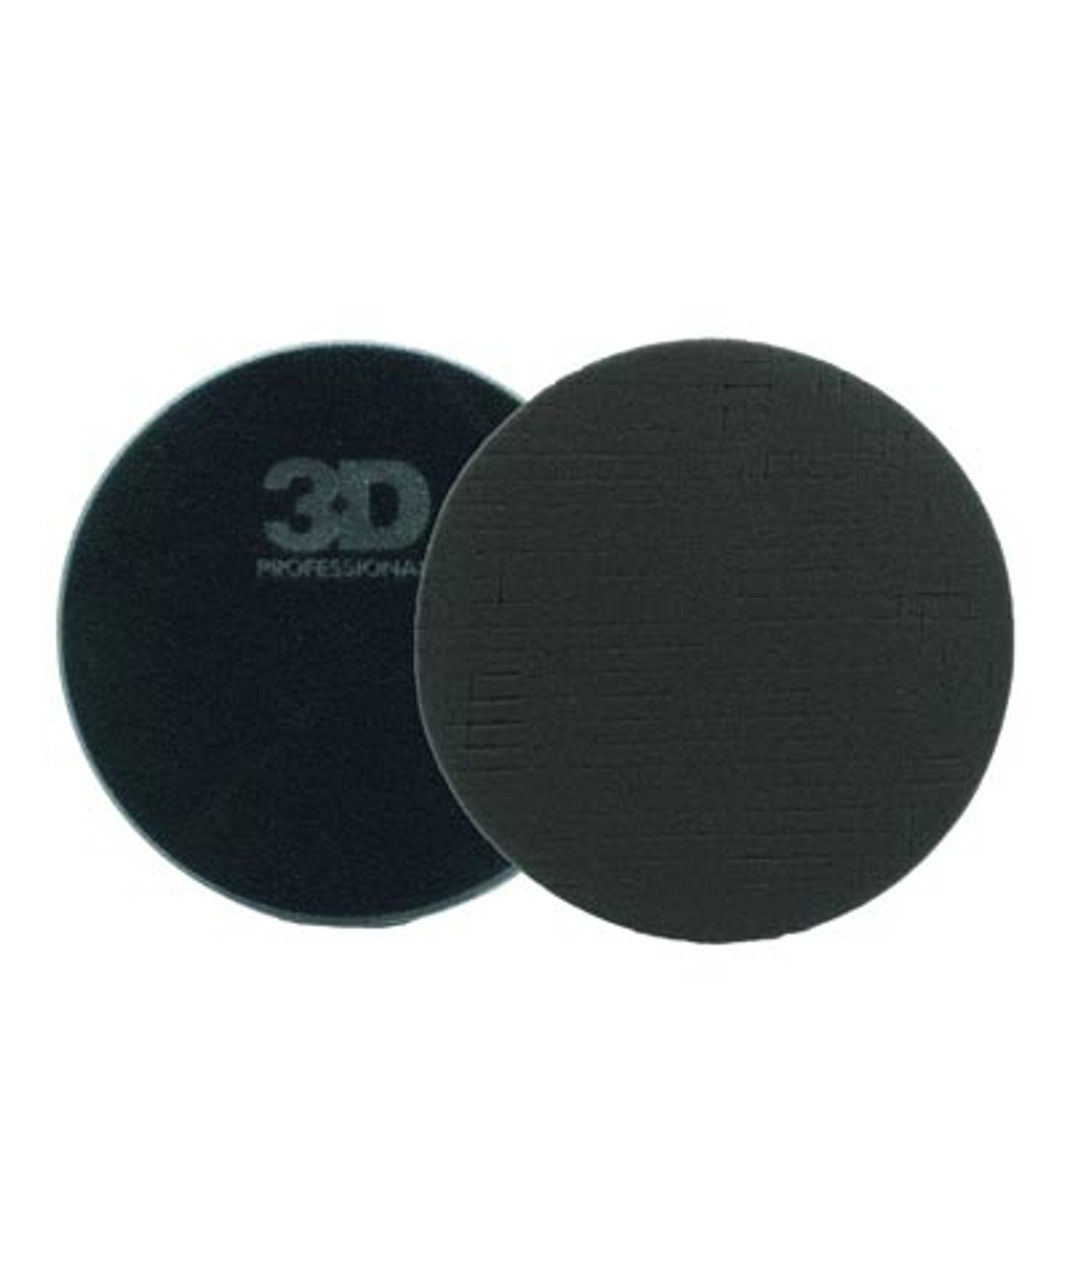 3D 6.5" Black Polishing Spider Pad